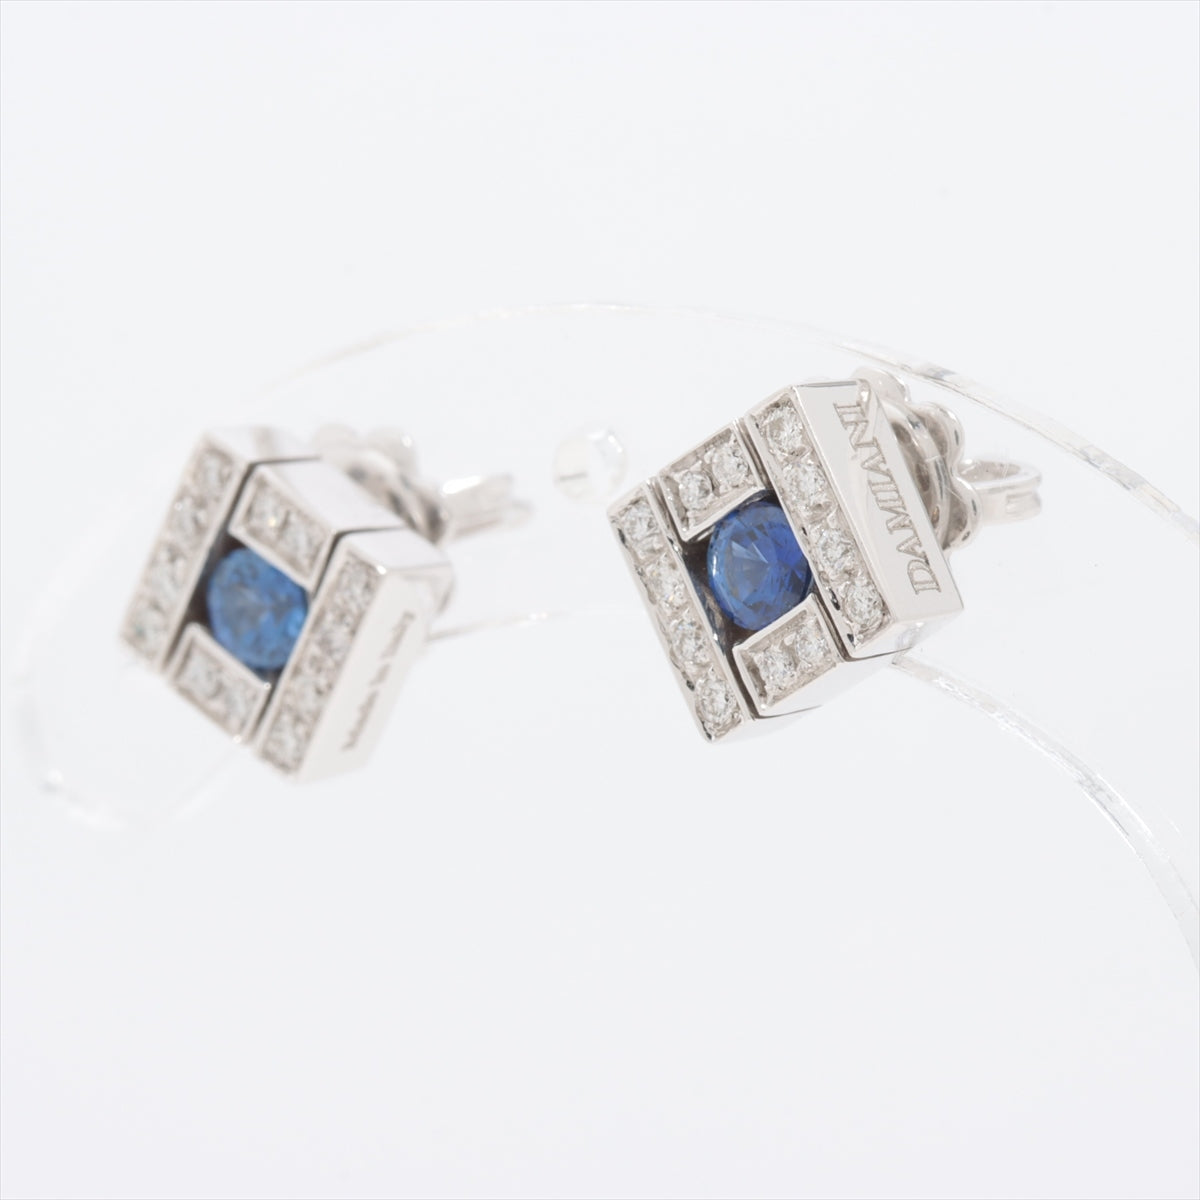 Damiani Belle Époque Sapphire diamond Piercing jewelry 750(WG) 4.8g 20019091